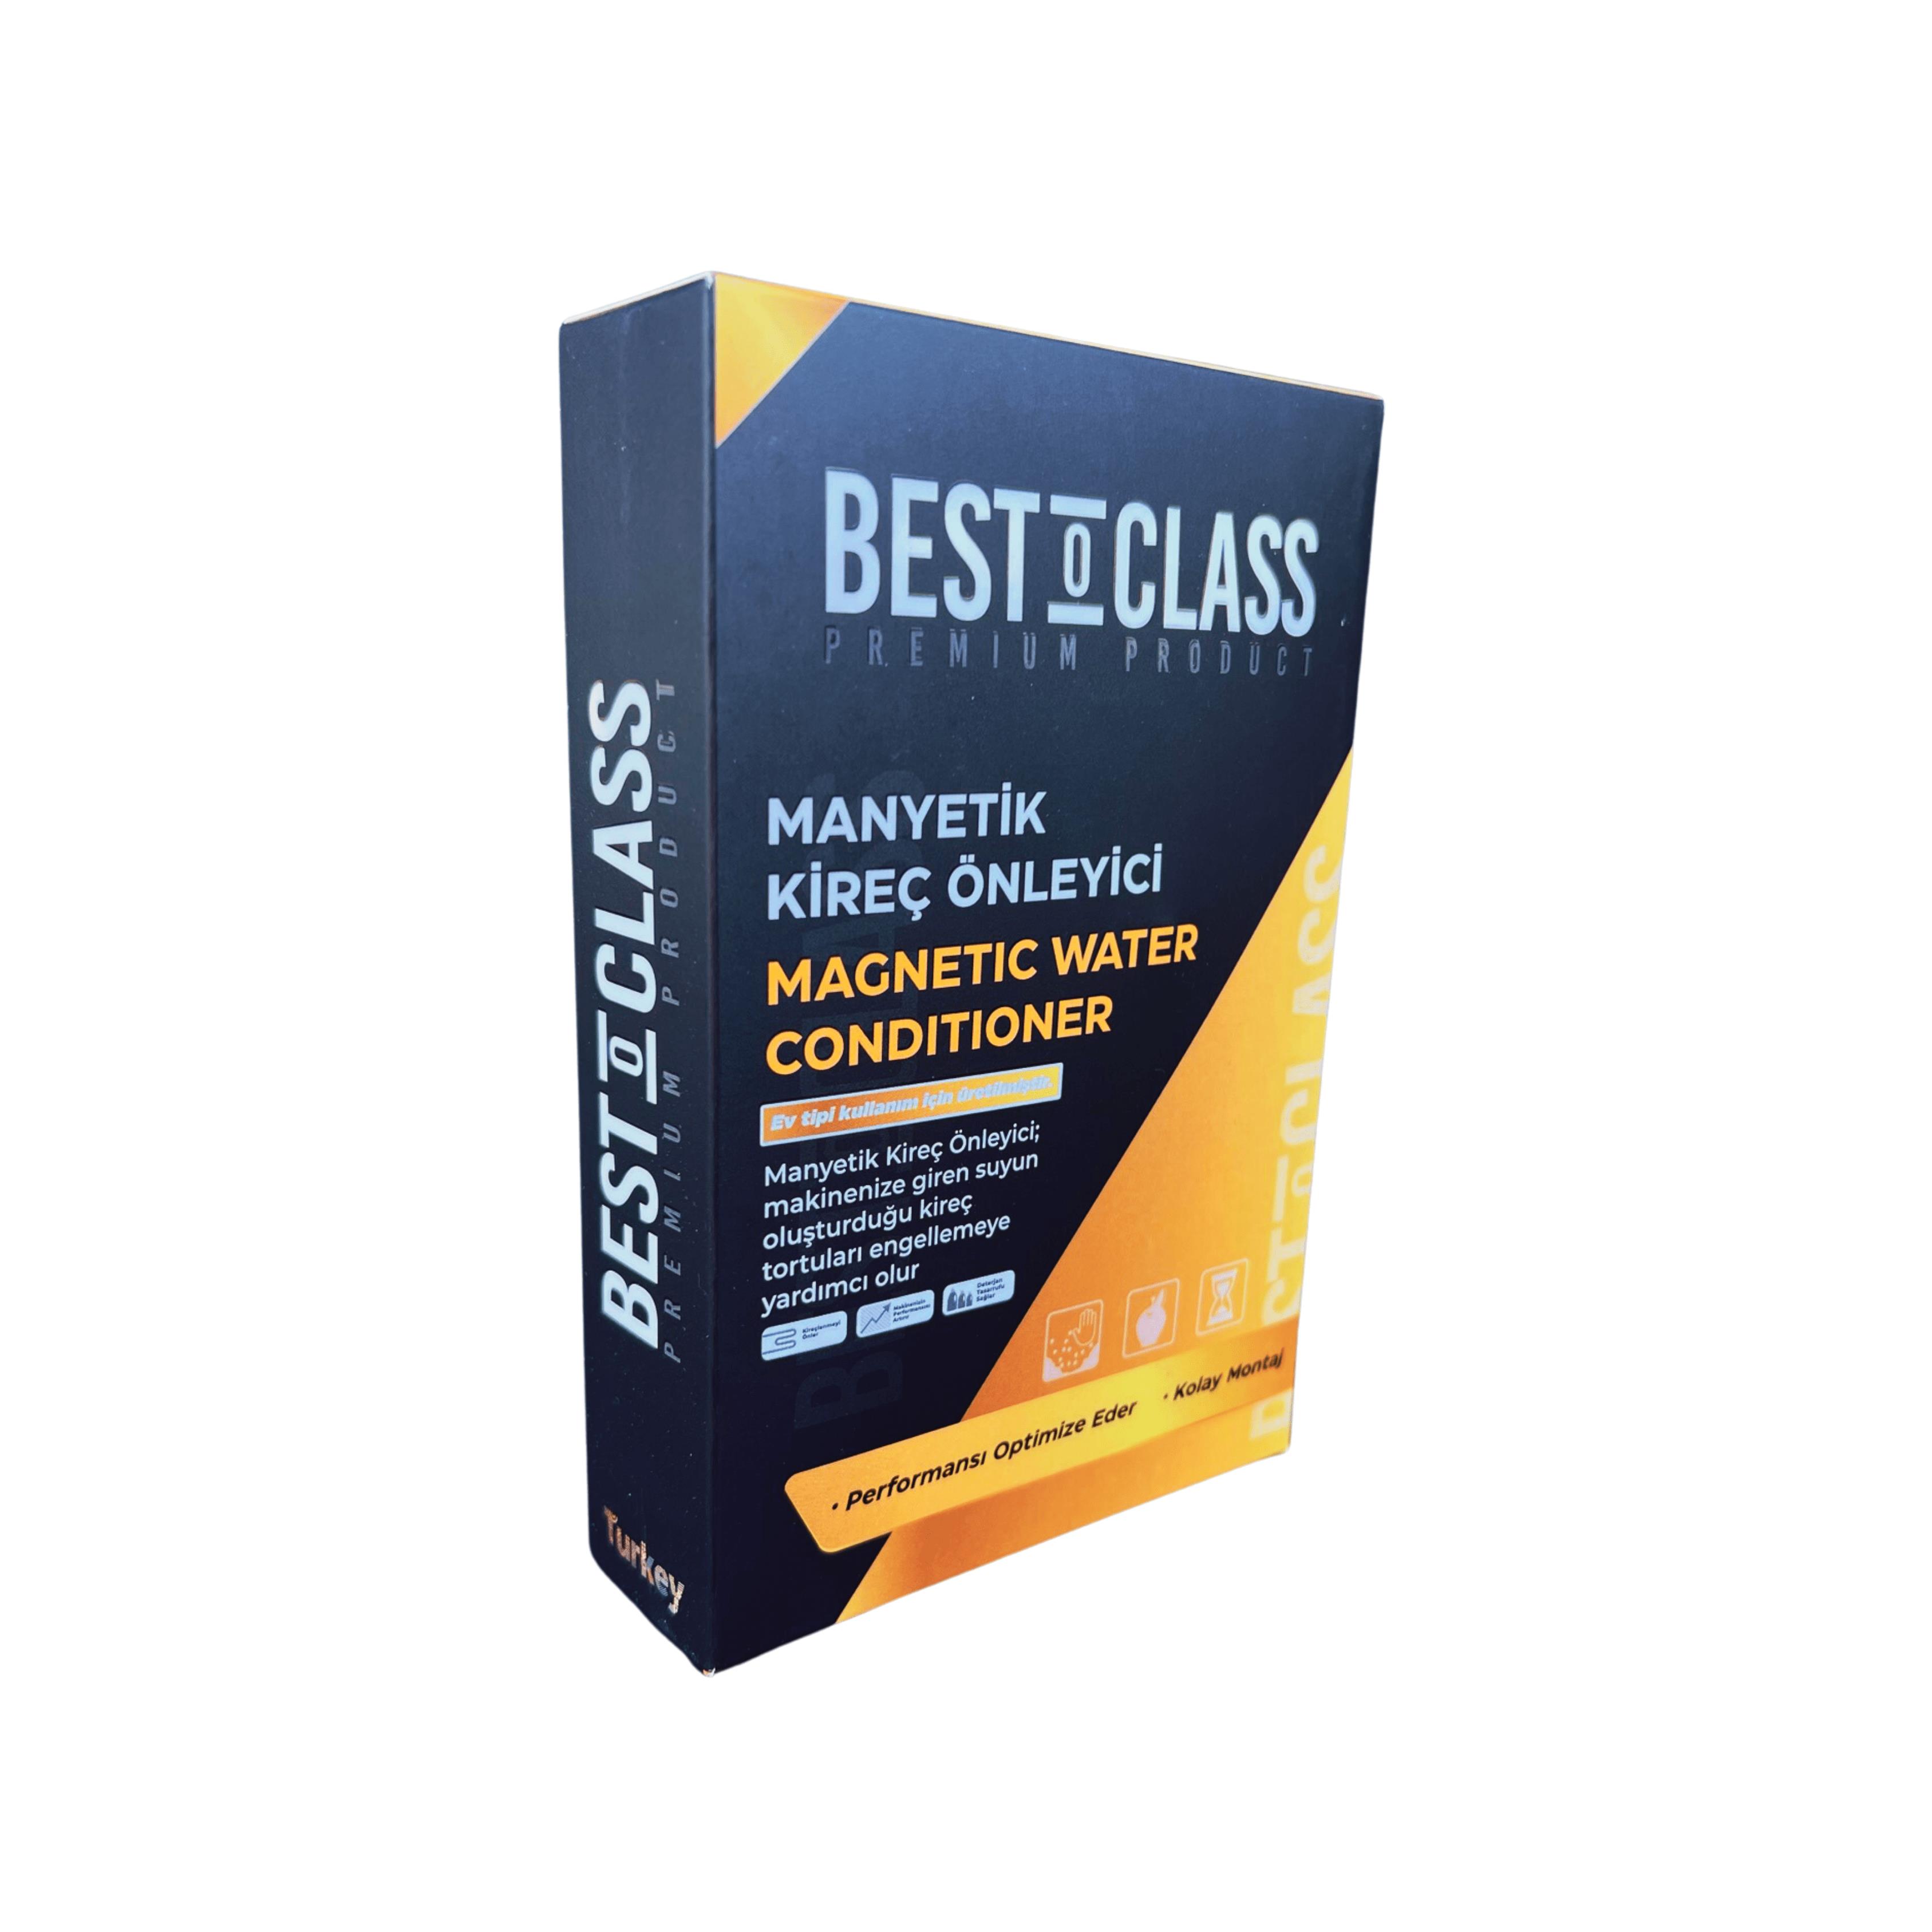 Bestoclass Premium Product Manyetik Kireç Önleyici